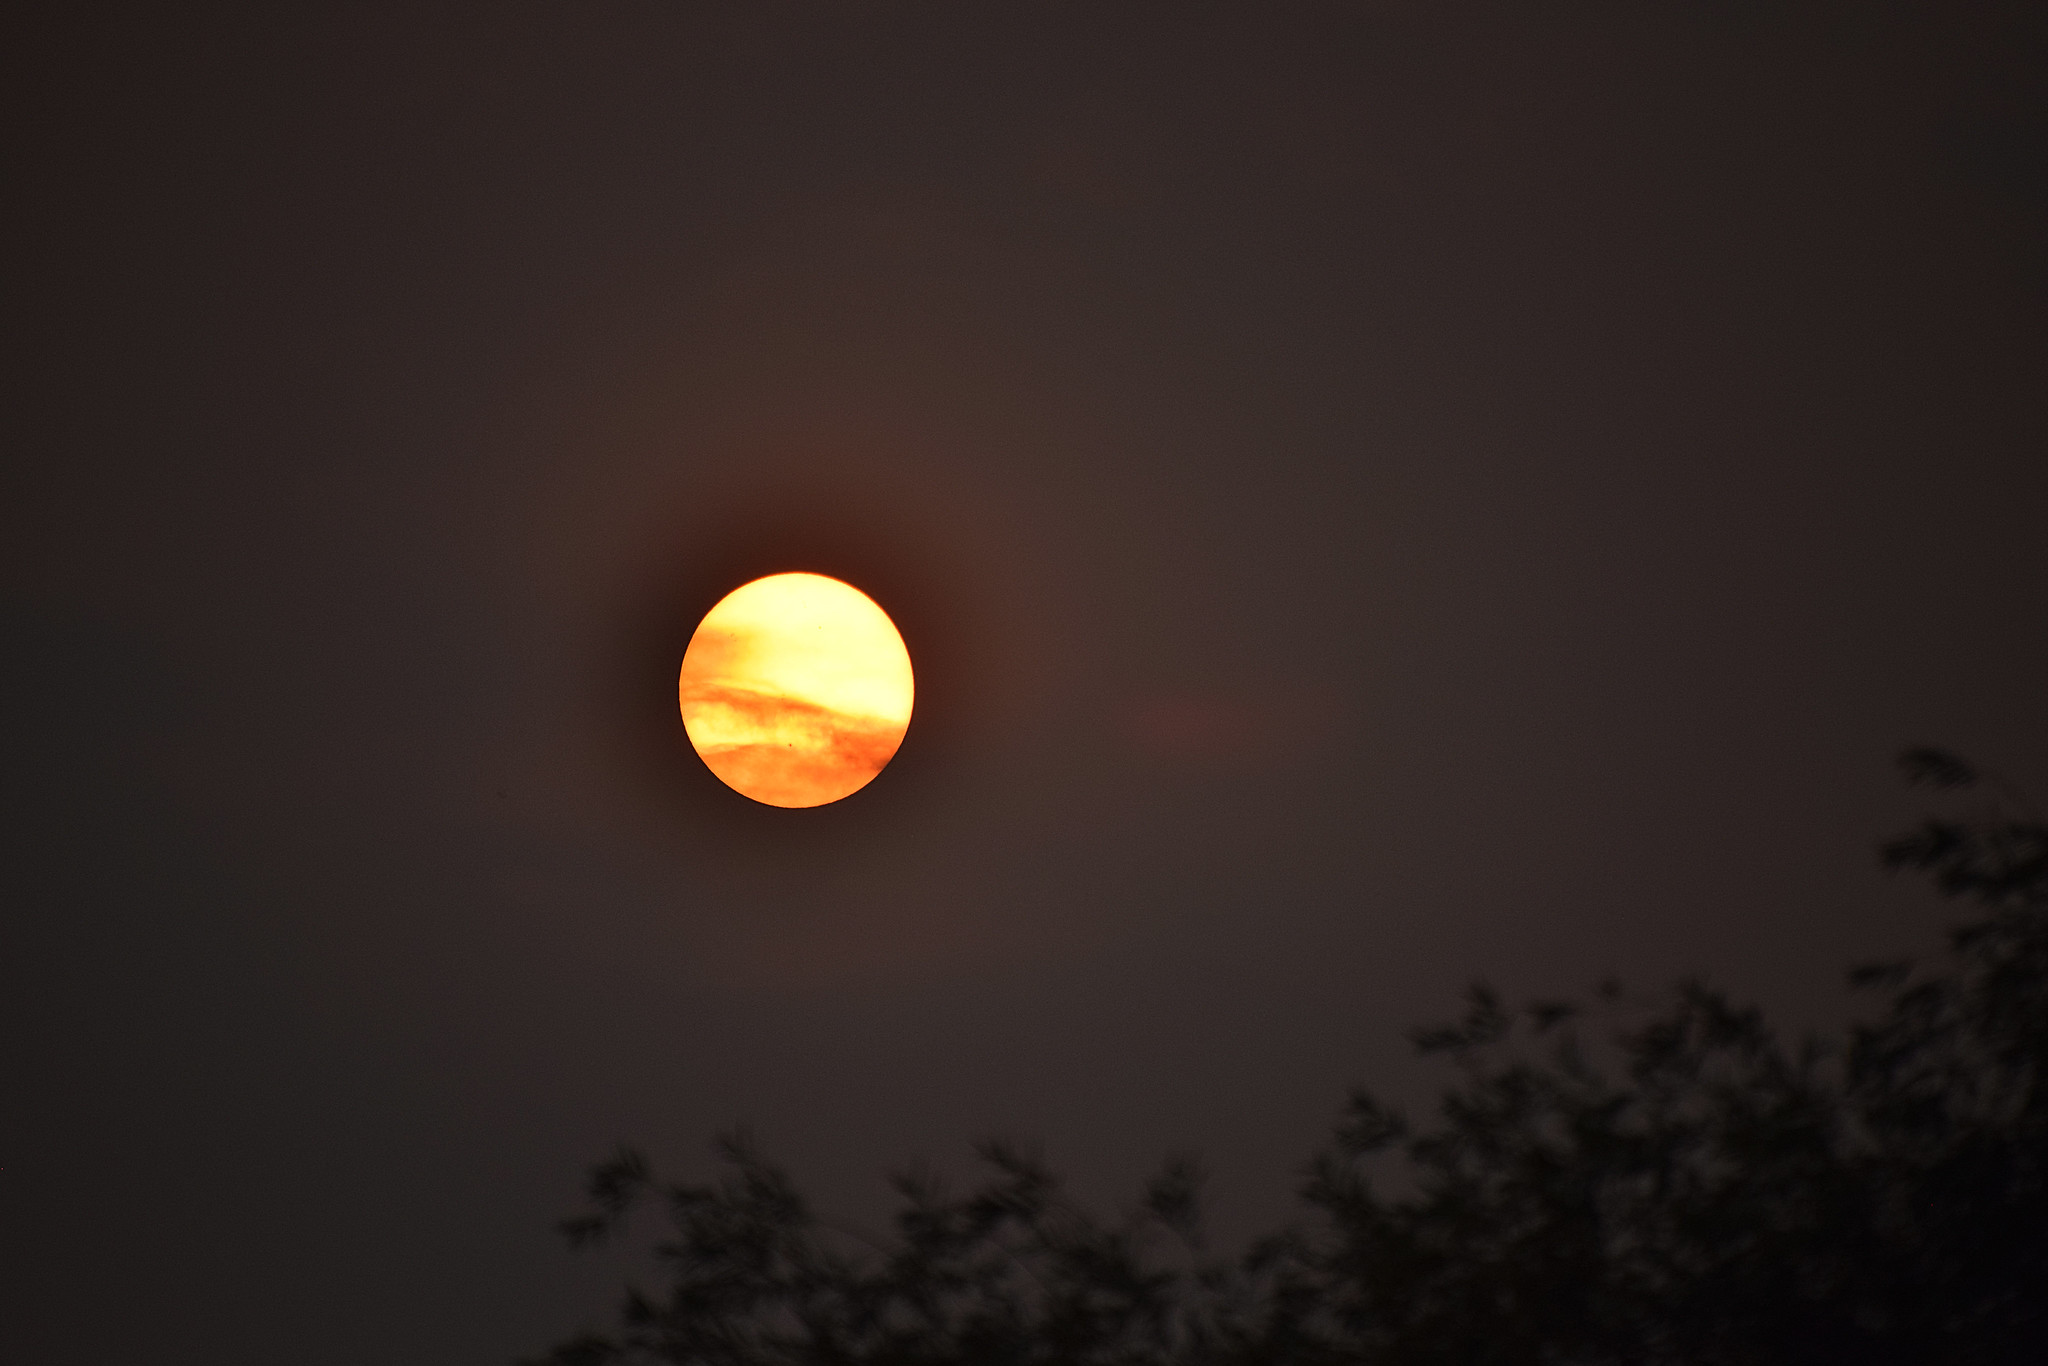 Wildfire smoke blocks sun, credit: MTSOFan on Flickr